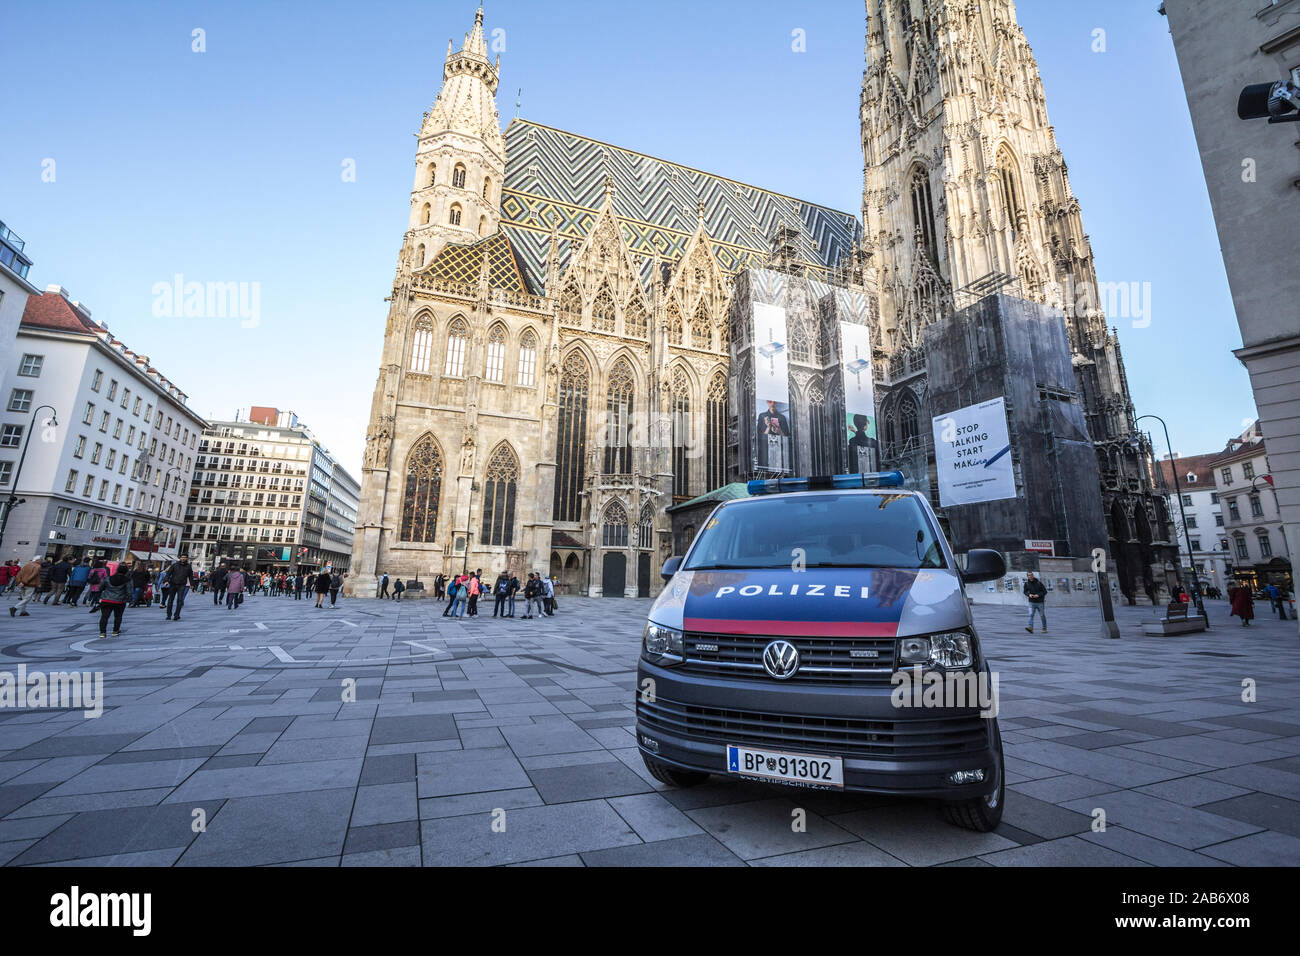 VIENNA, AUSTRIA - NOVEMBER 6, 2019: Austrian police car from the Bundespolizei, or polizei, patrolling and guarding Stephansplatz and the Domkirche ca Stock Photo